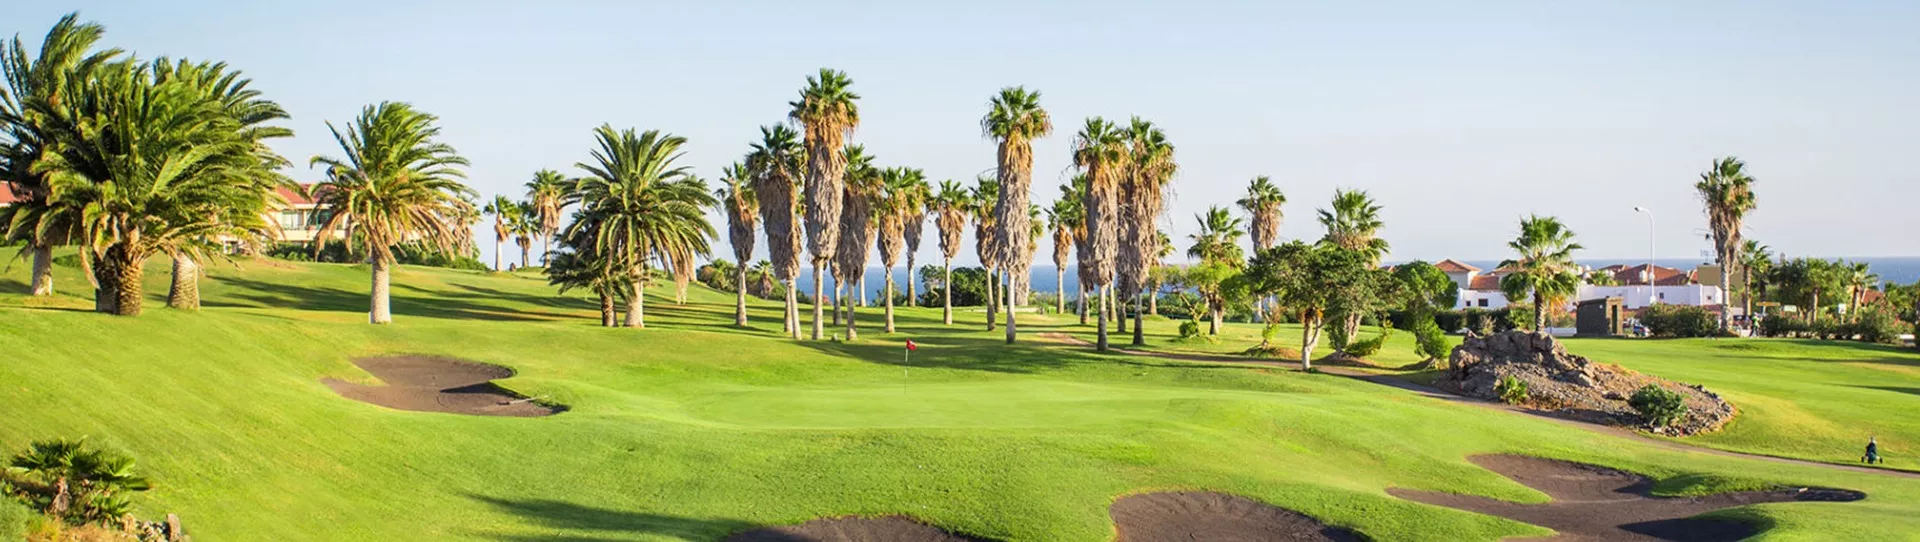 Spain golf holidays - Golf del Sur Trio Experience - Photo 1